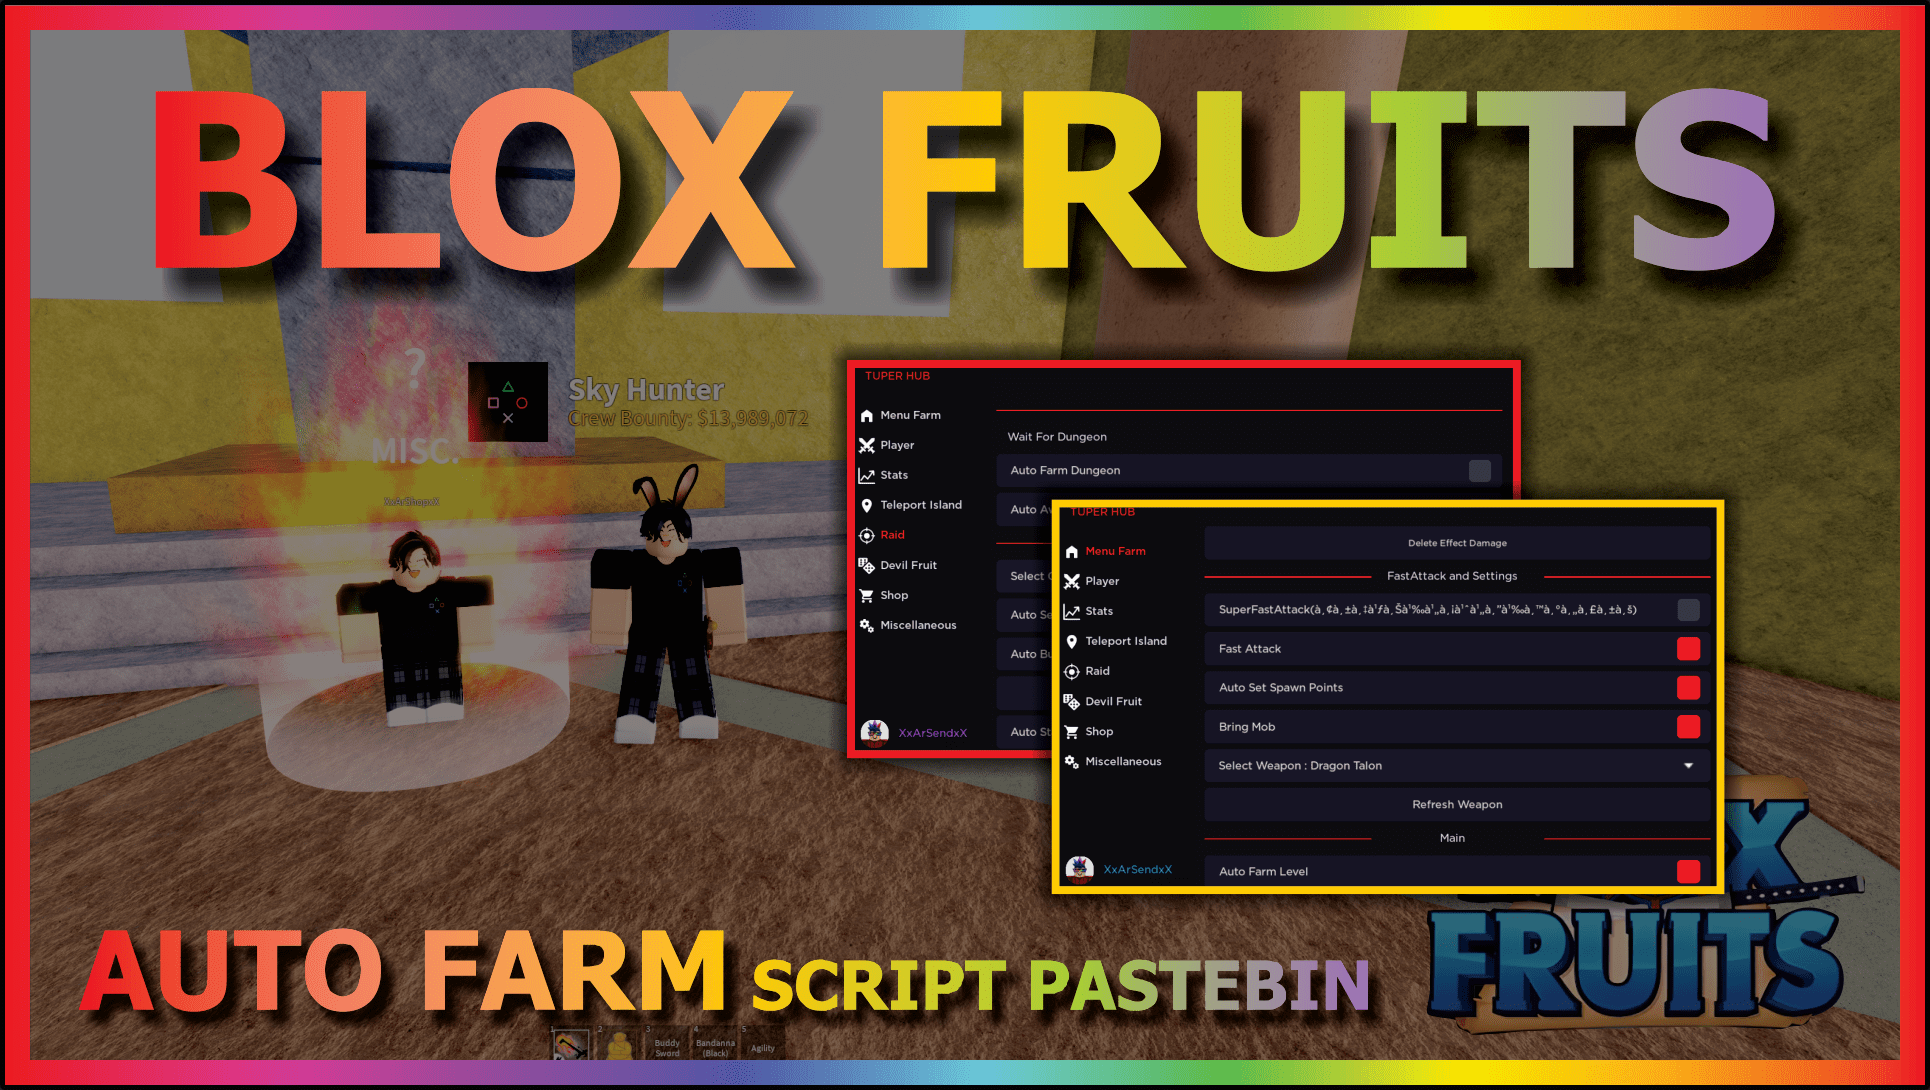 Blox Fruits: Auto Farm Level, Auto Raid & More Scripts